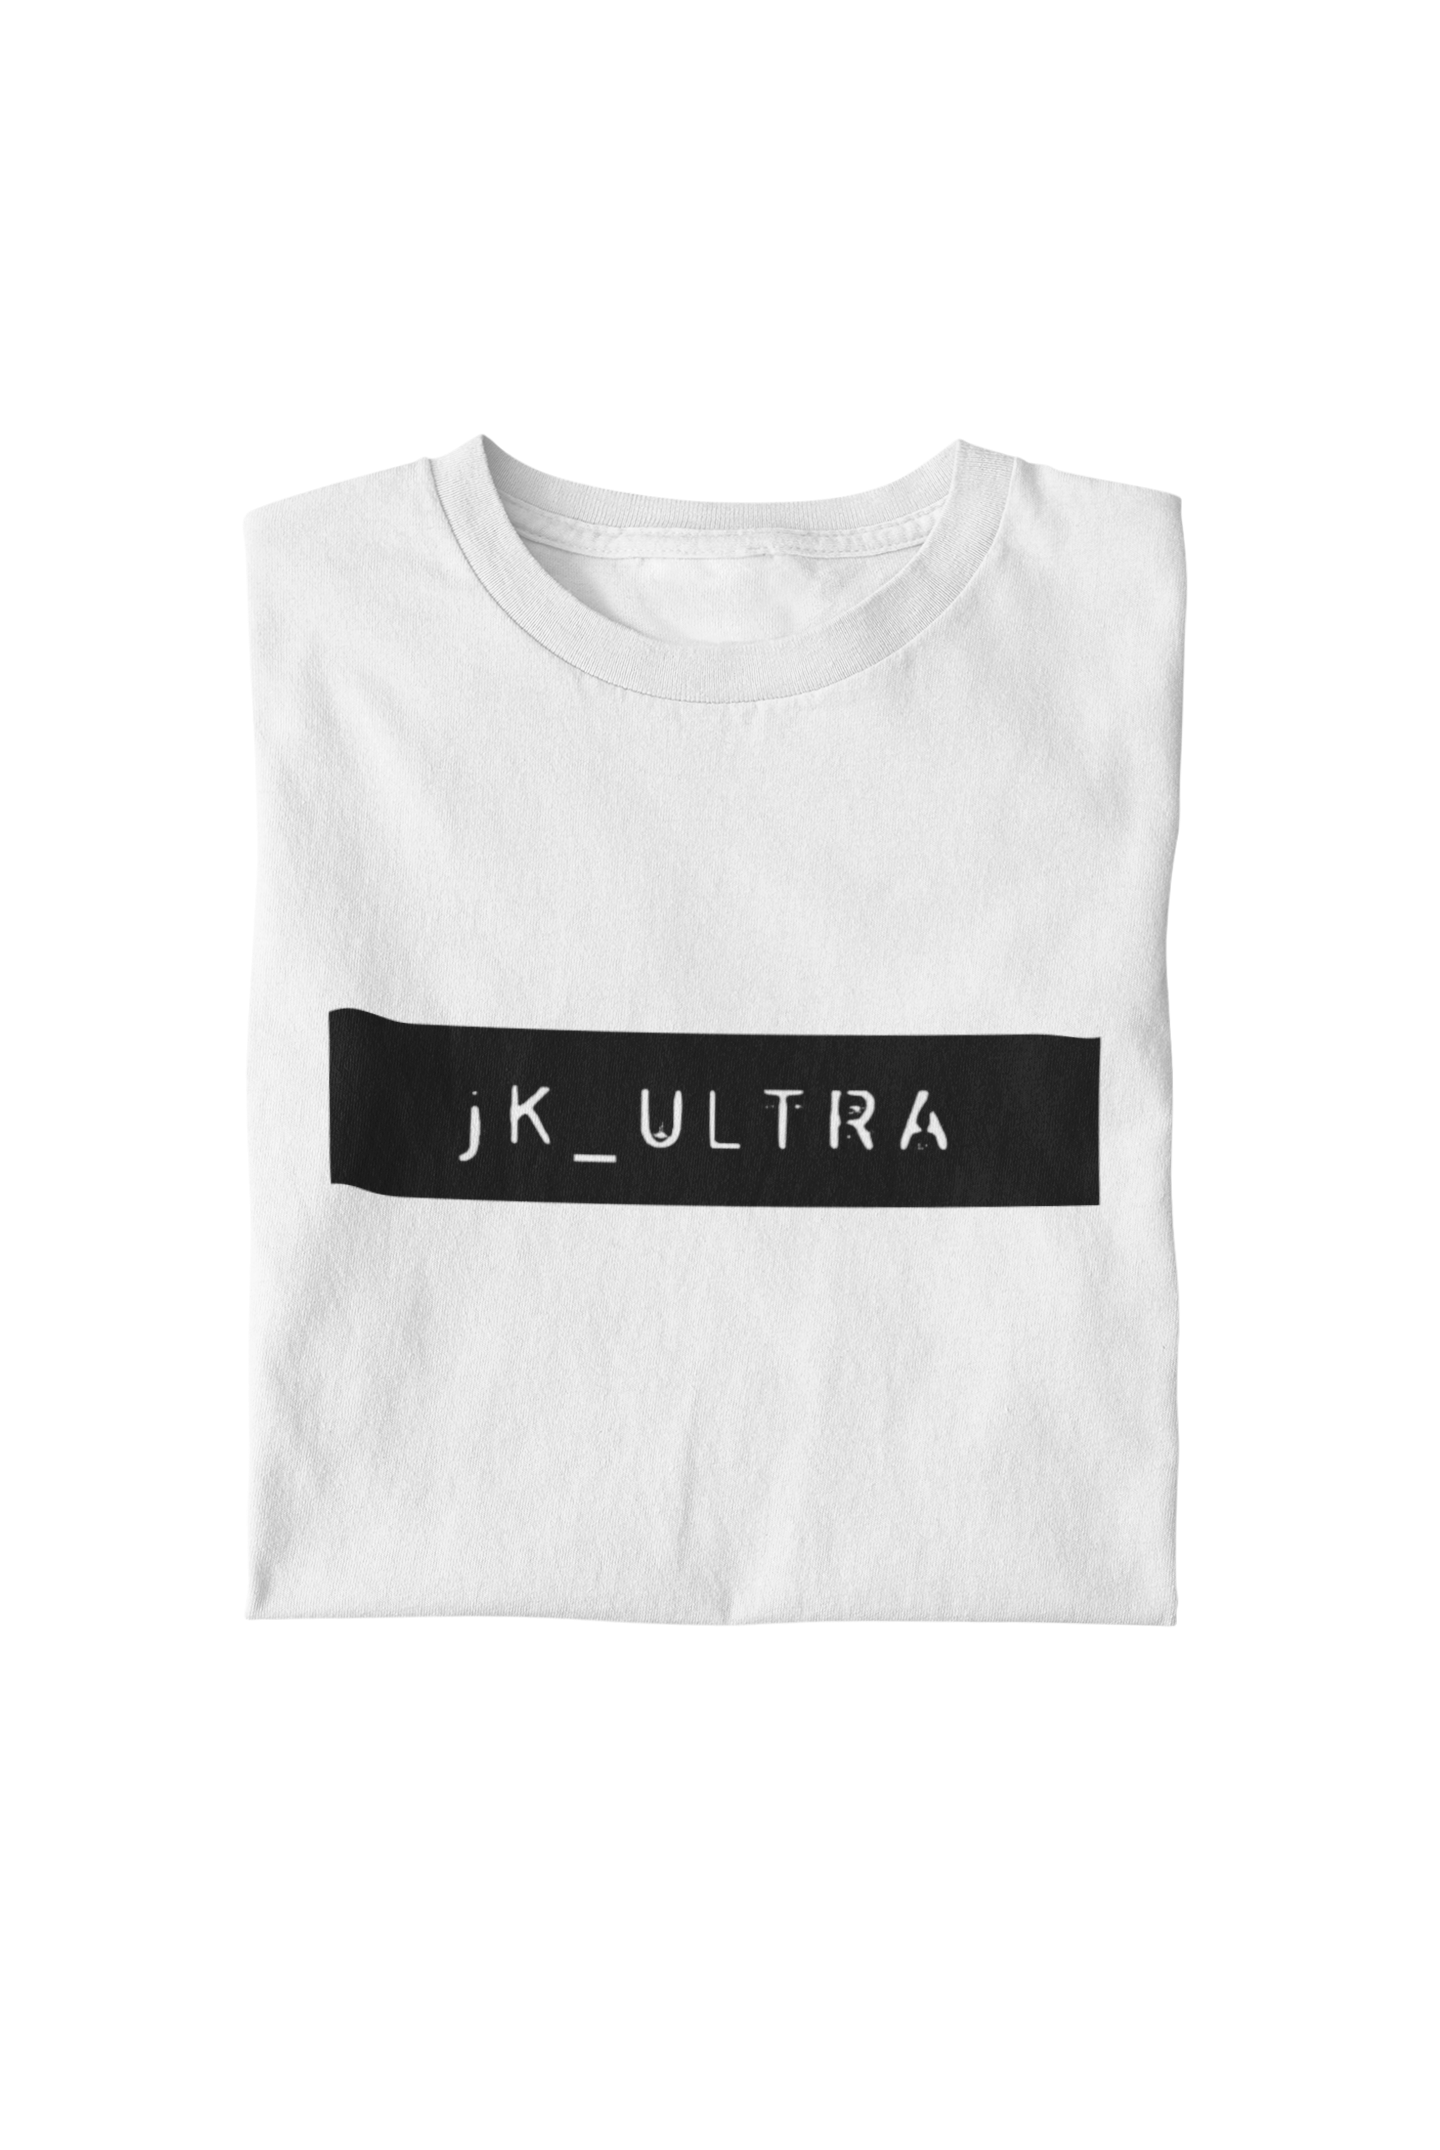 jk_ultra Logo Tee - Women